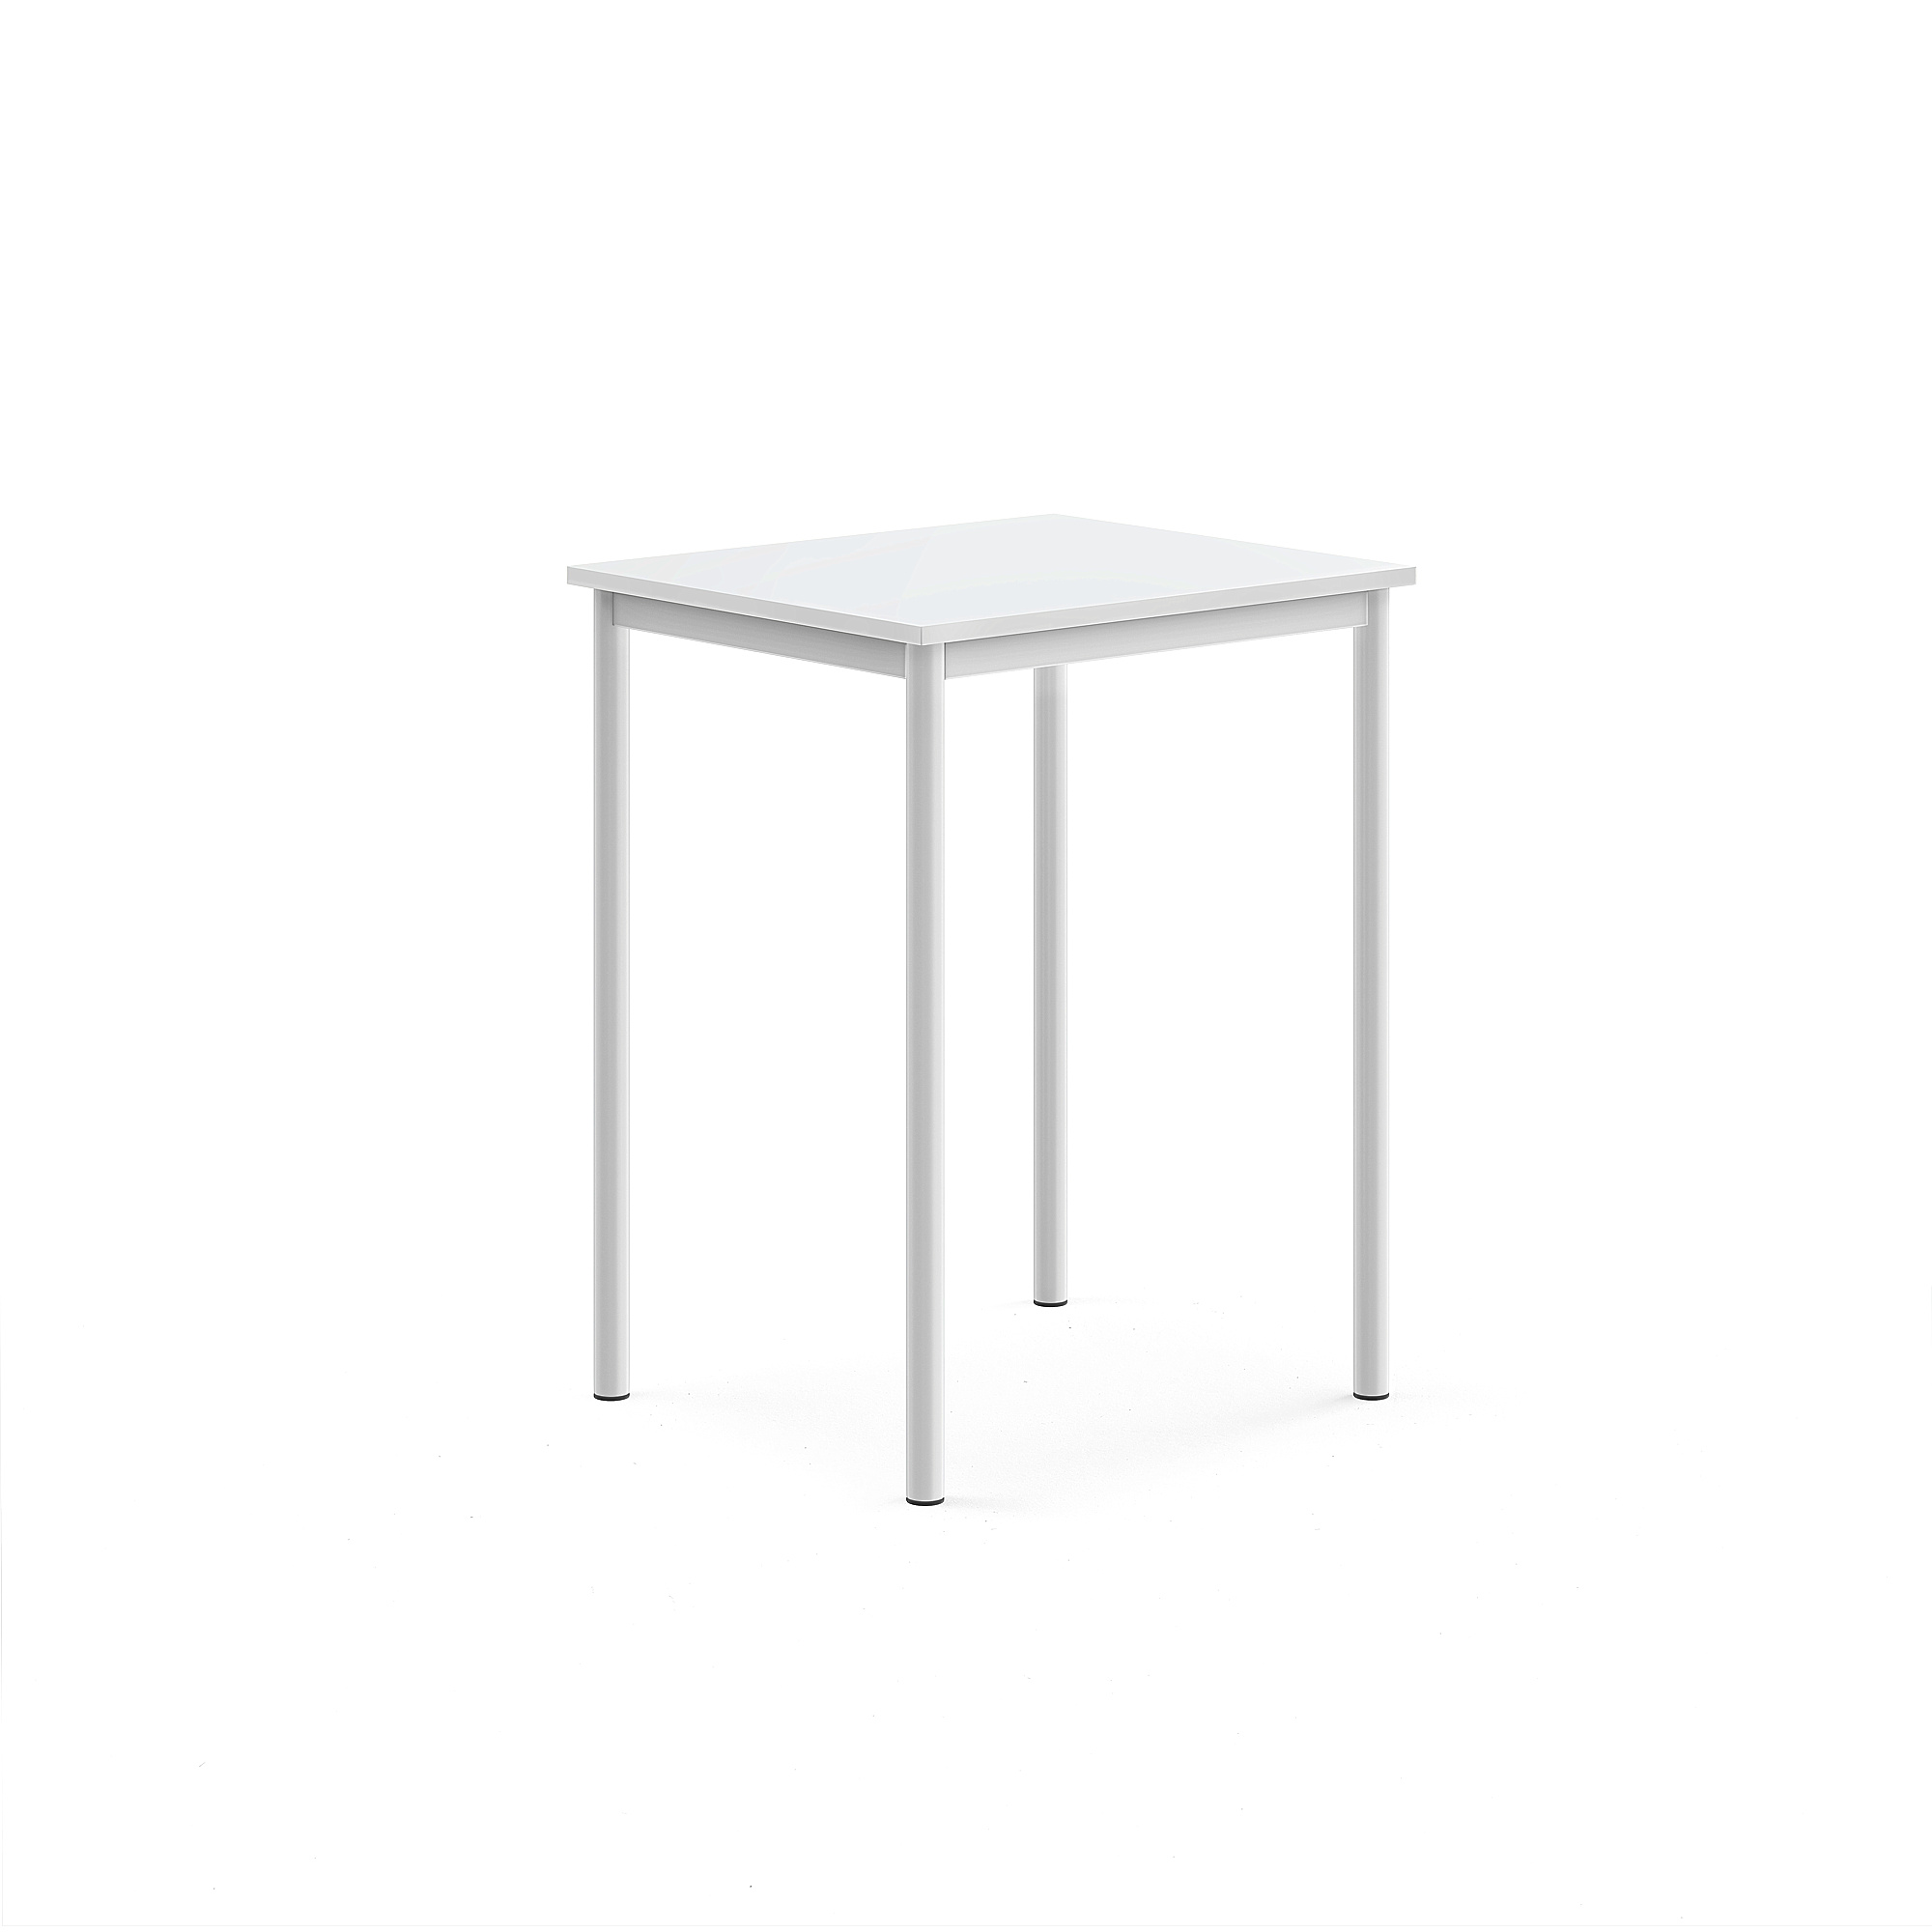 Stůl SONITUS, 700x600x900 mm, bílé nohy, HPL deska tlumící hluk, bílá